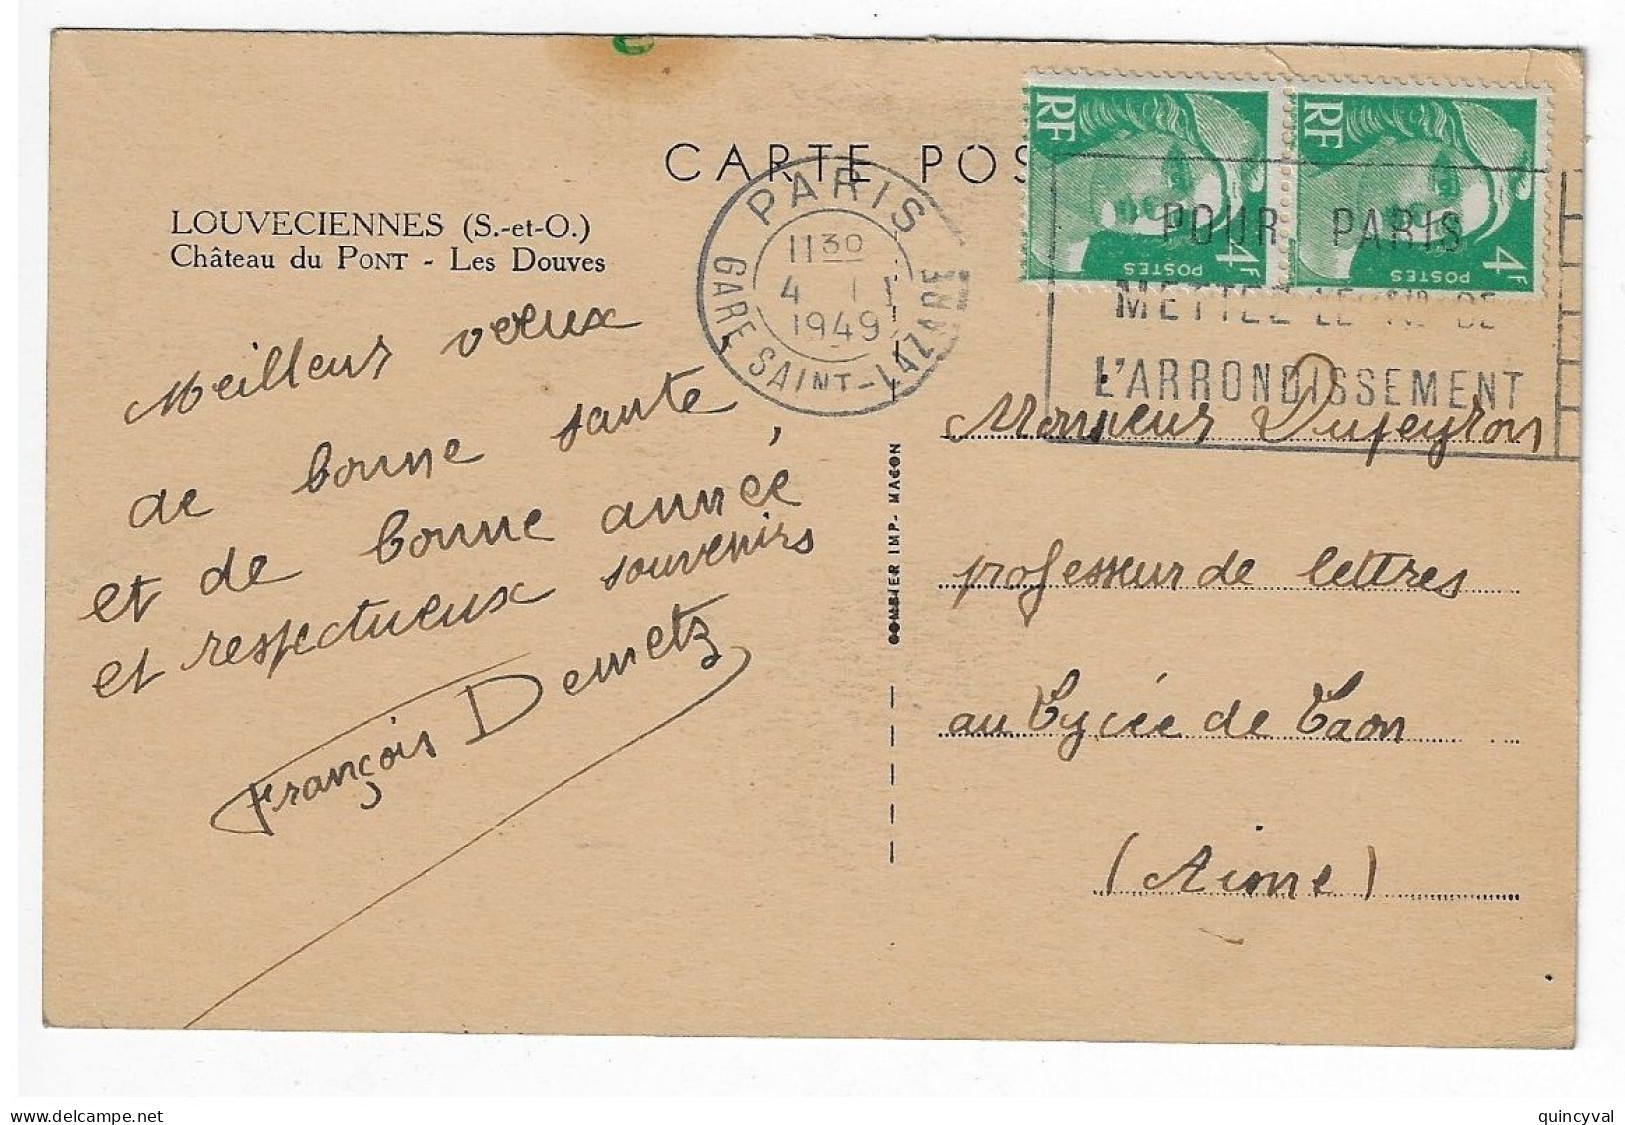 PARIS Gare St Lazare Carte Postale 4 F Gandon Vert Emeraude X 2 Ob Meca 4 1 1949 - 1945-54 Marianne Of Gandon